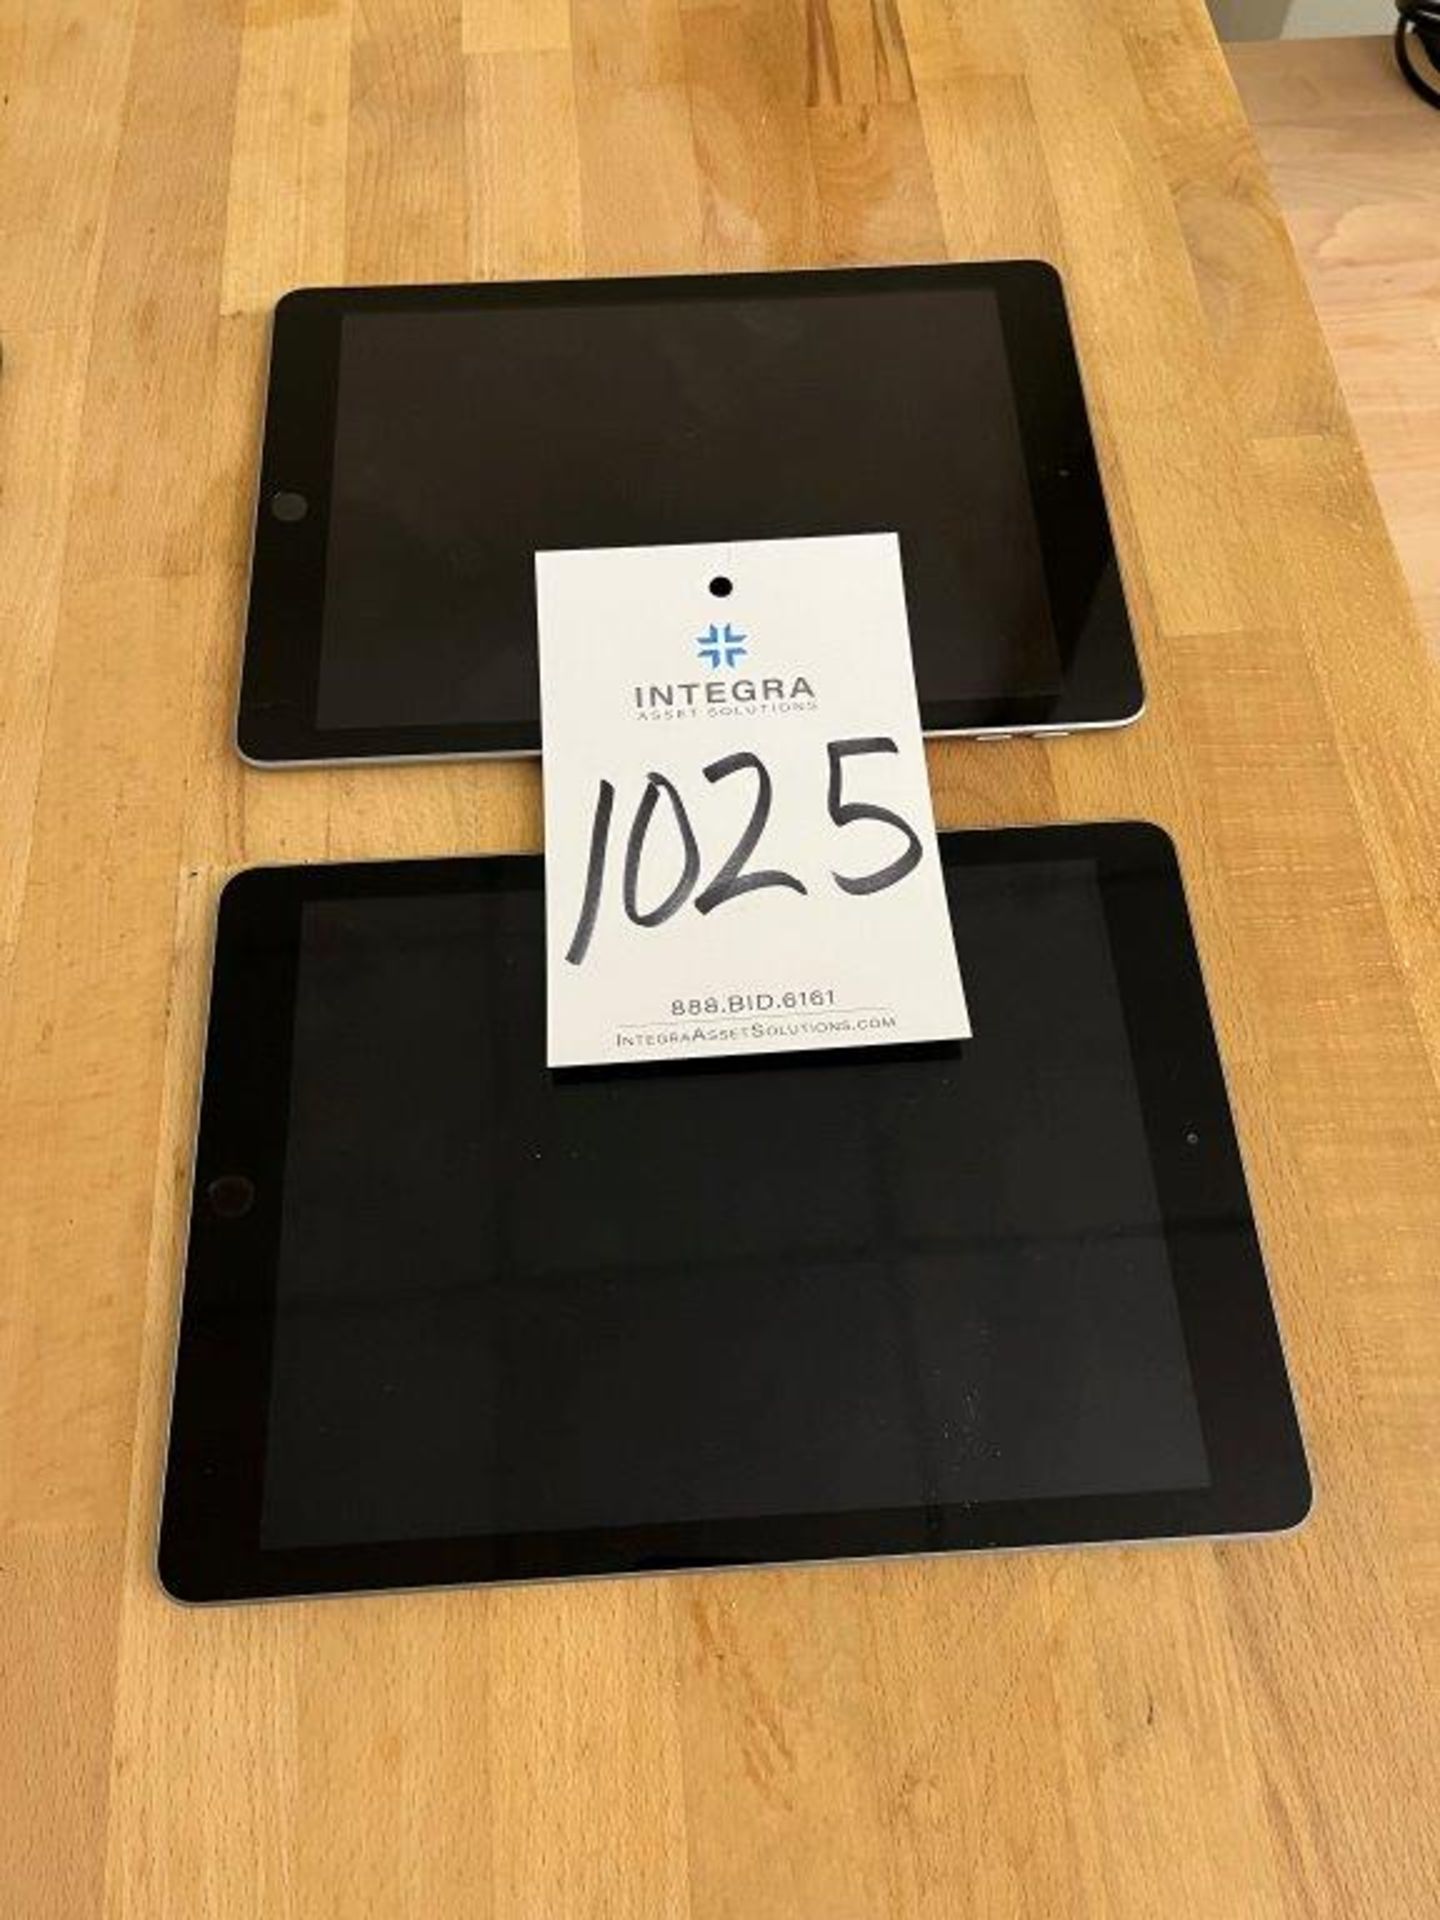 (2) Apple Model A893 iPad